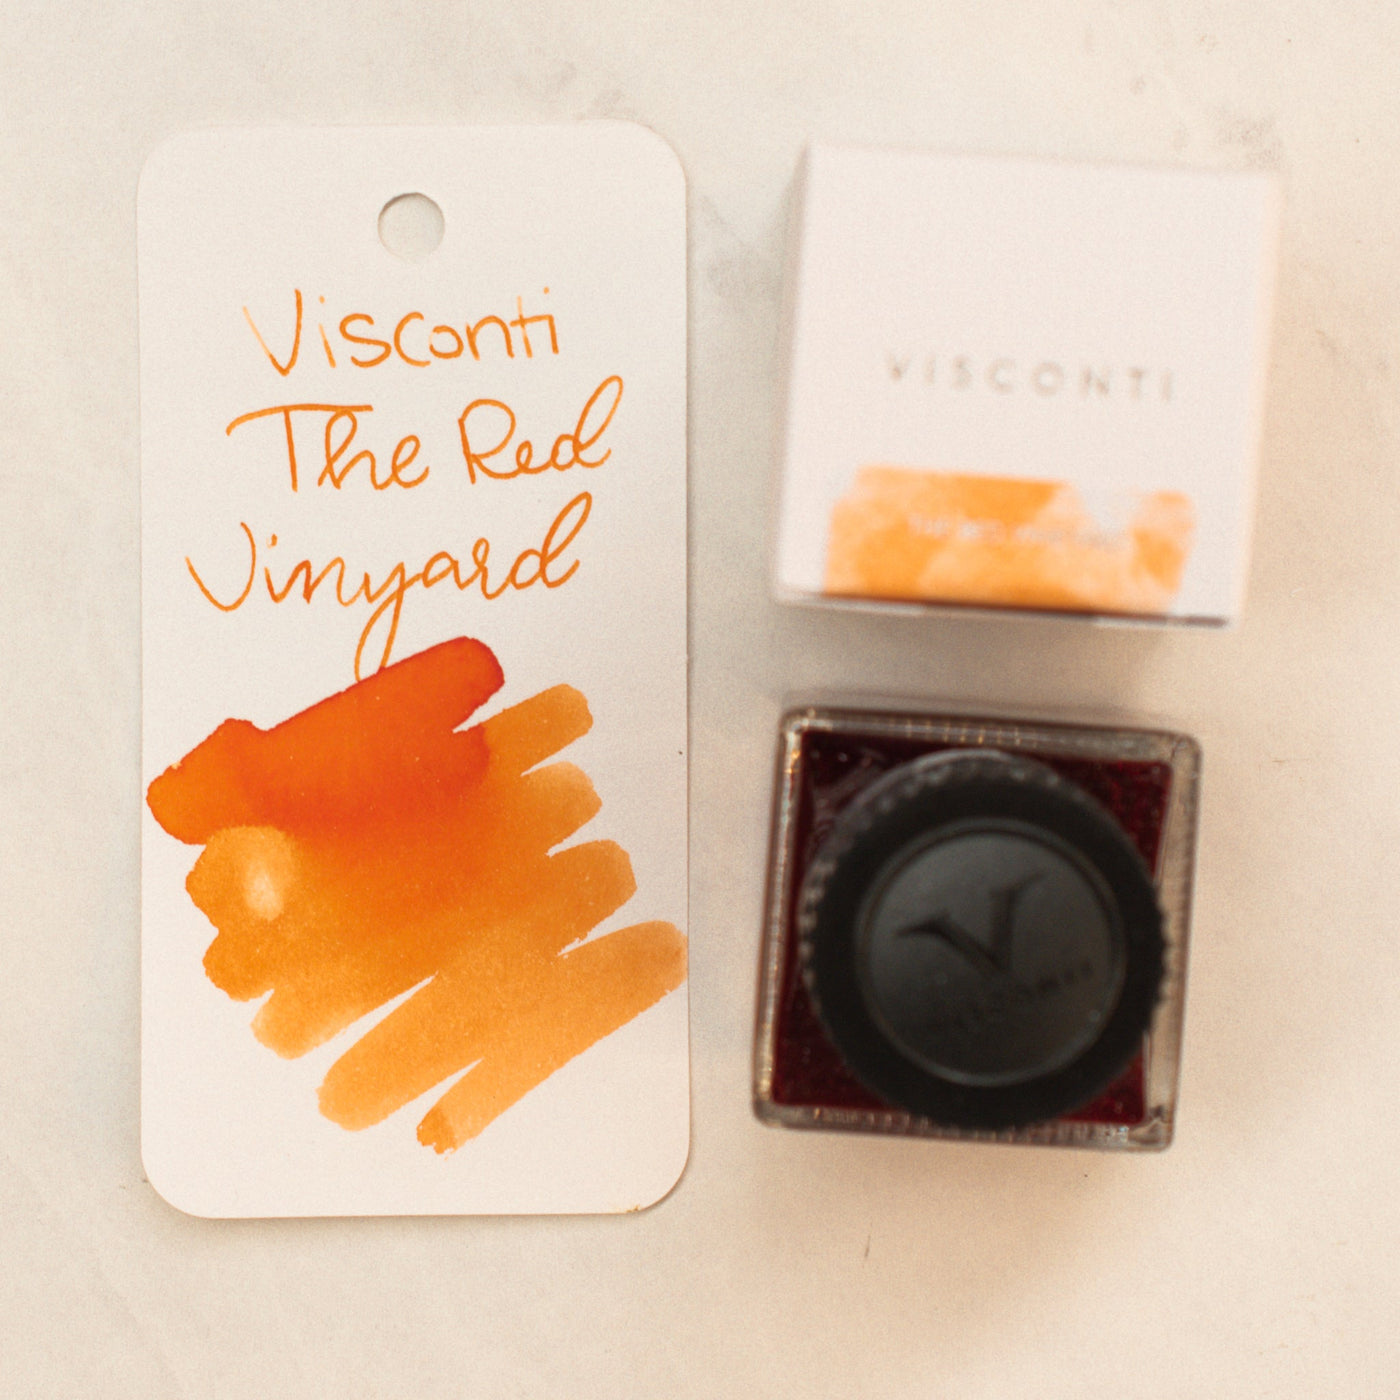 Visconti-Van-Gogh-The-Red-Vineyard-Ink-Bottle-Orange